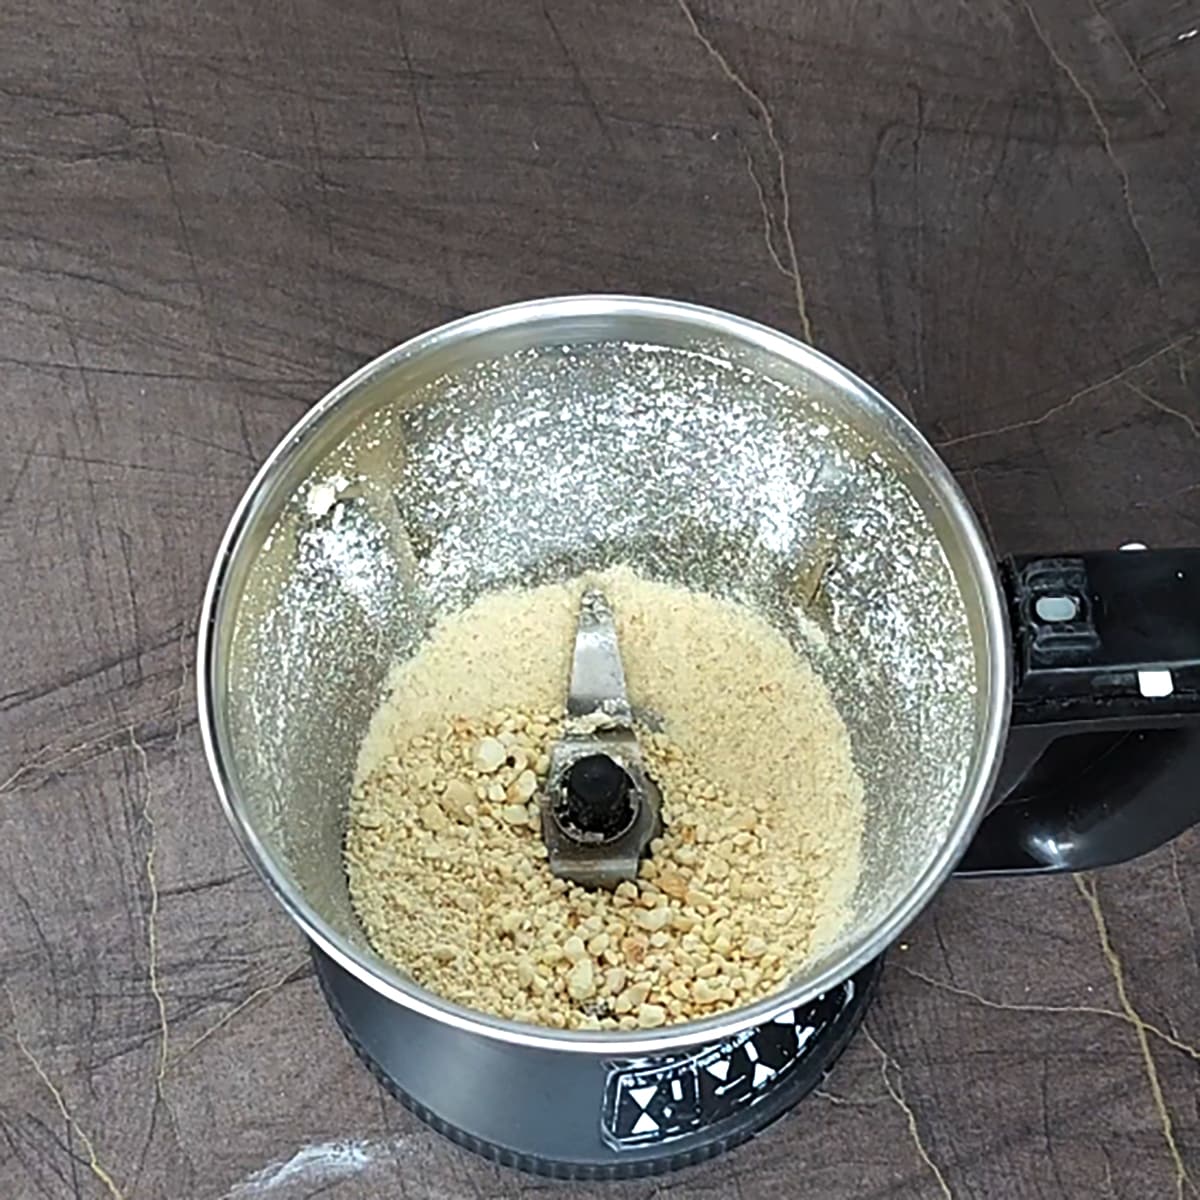 Grind the cashew to coarse powder. 